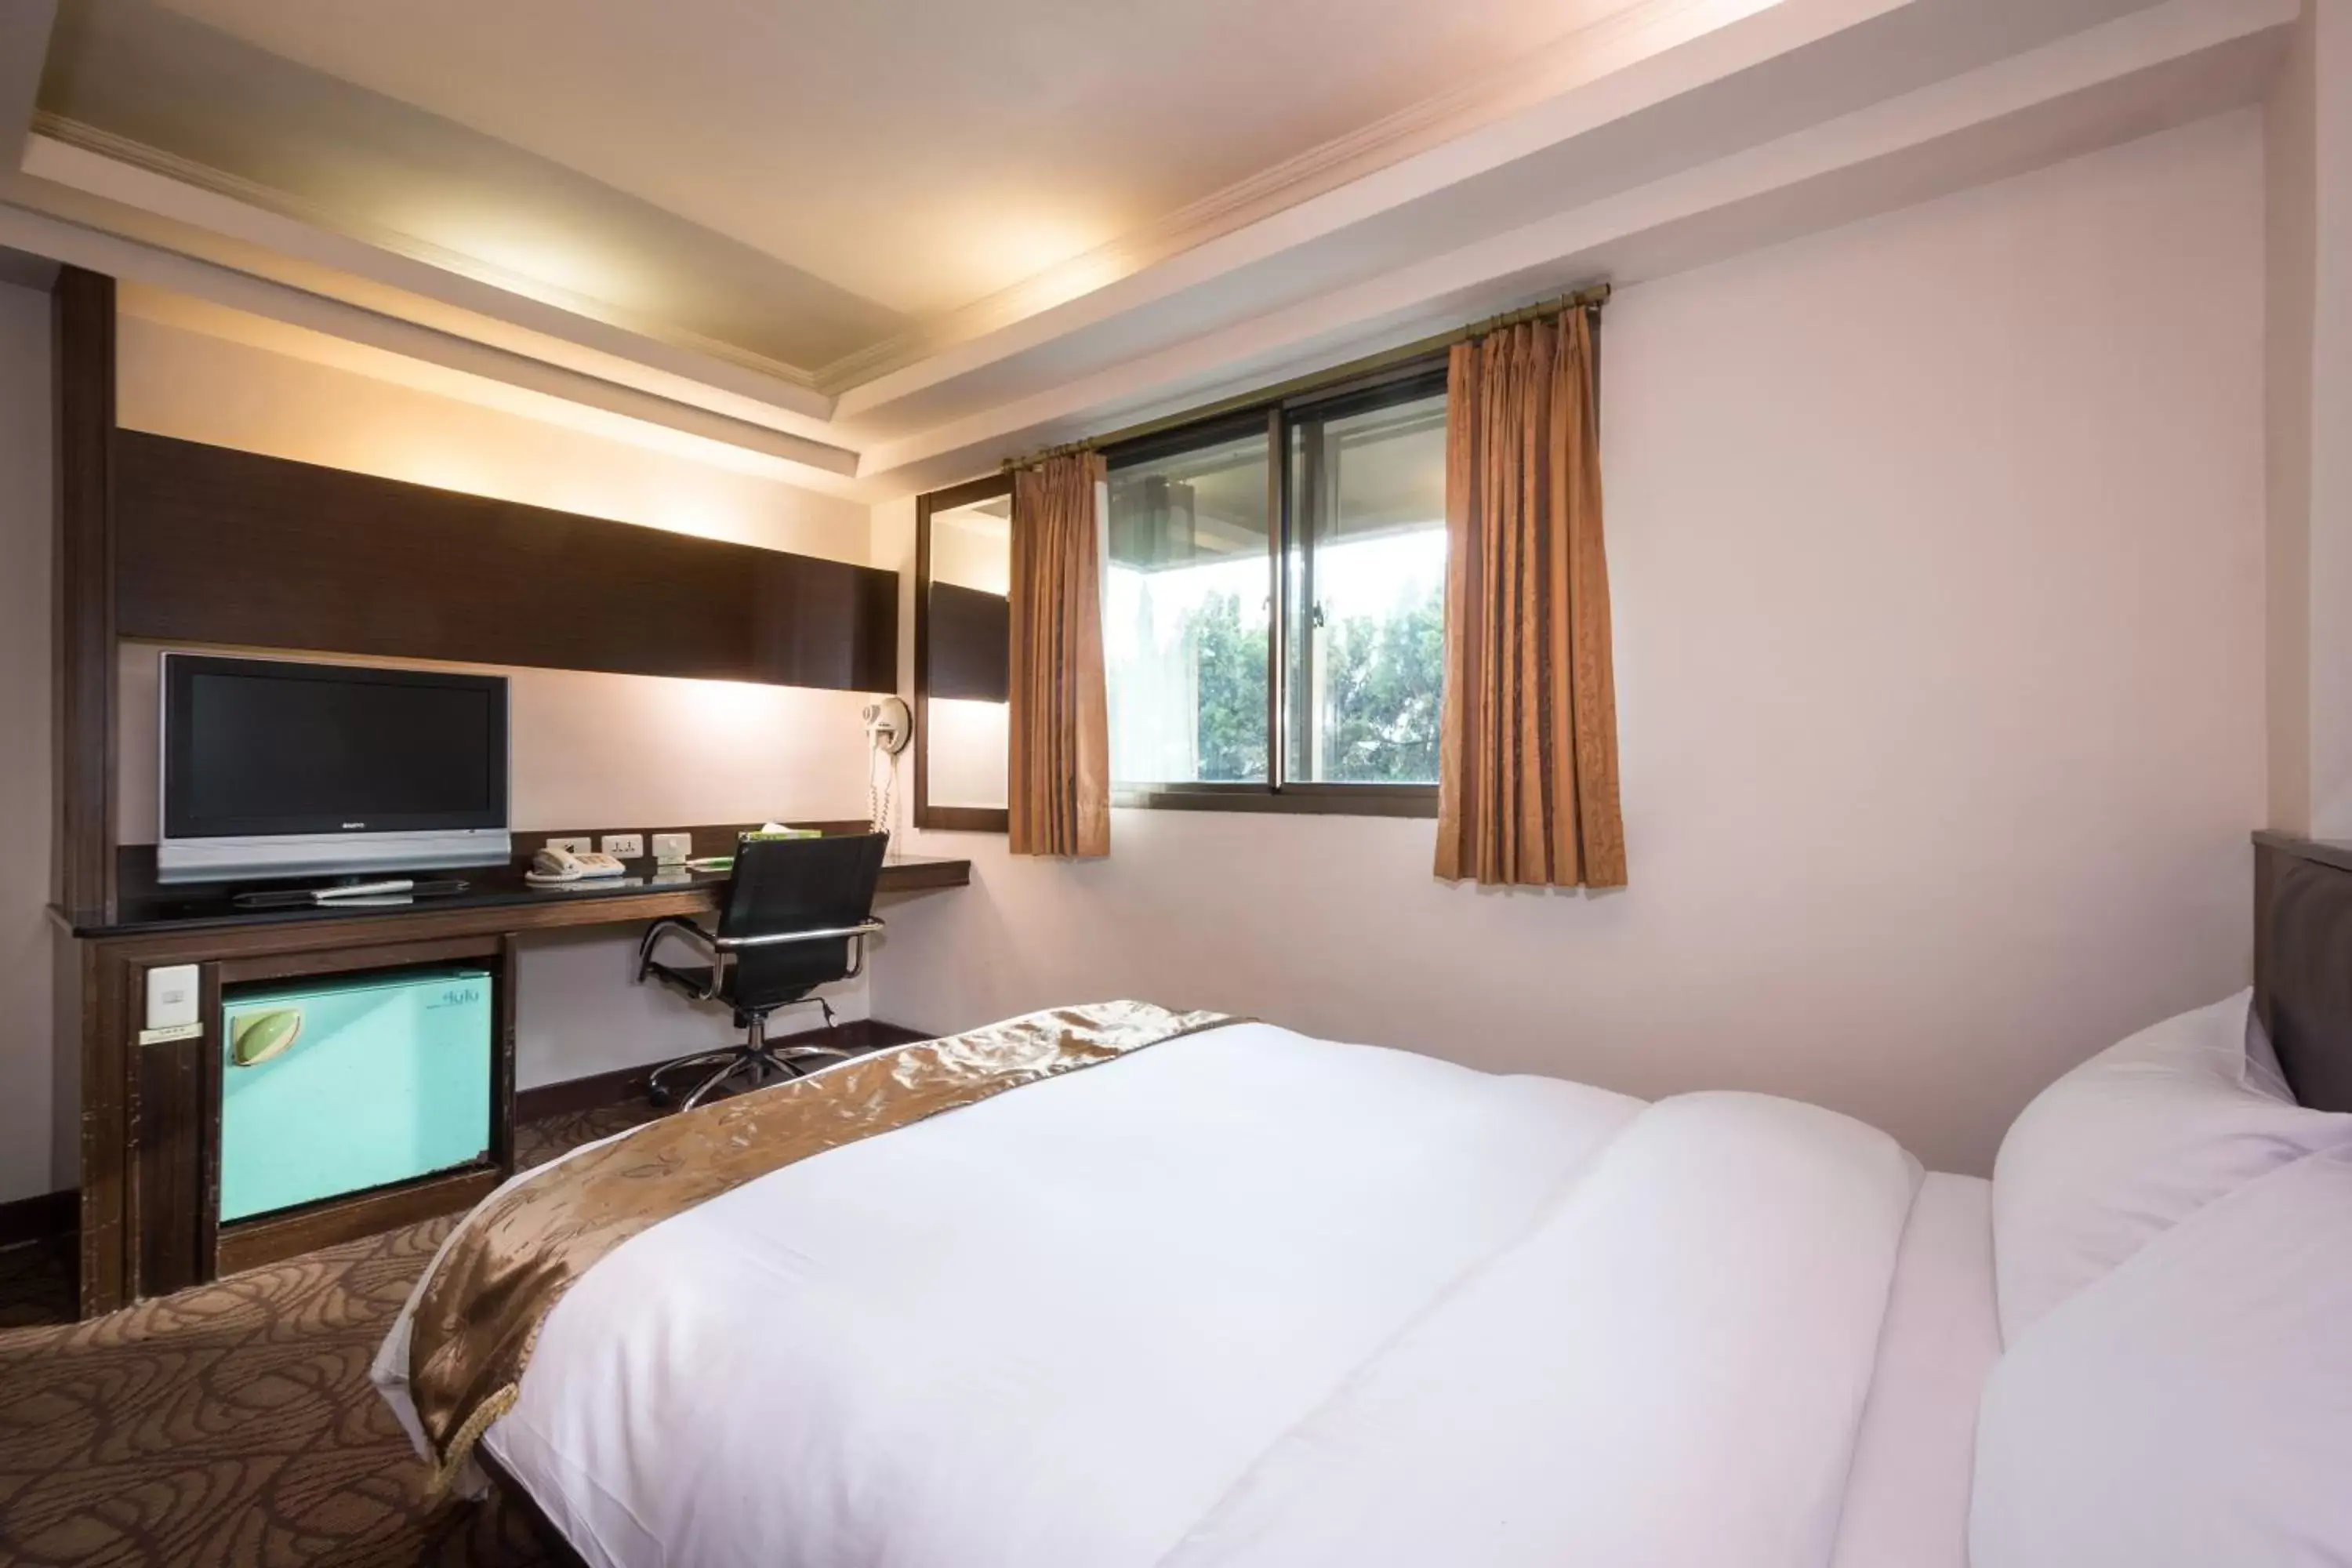 TV and multimedia, Room Photo in The Enterpriser Hotel